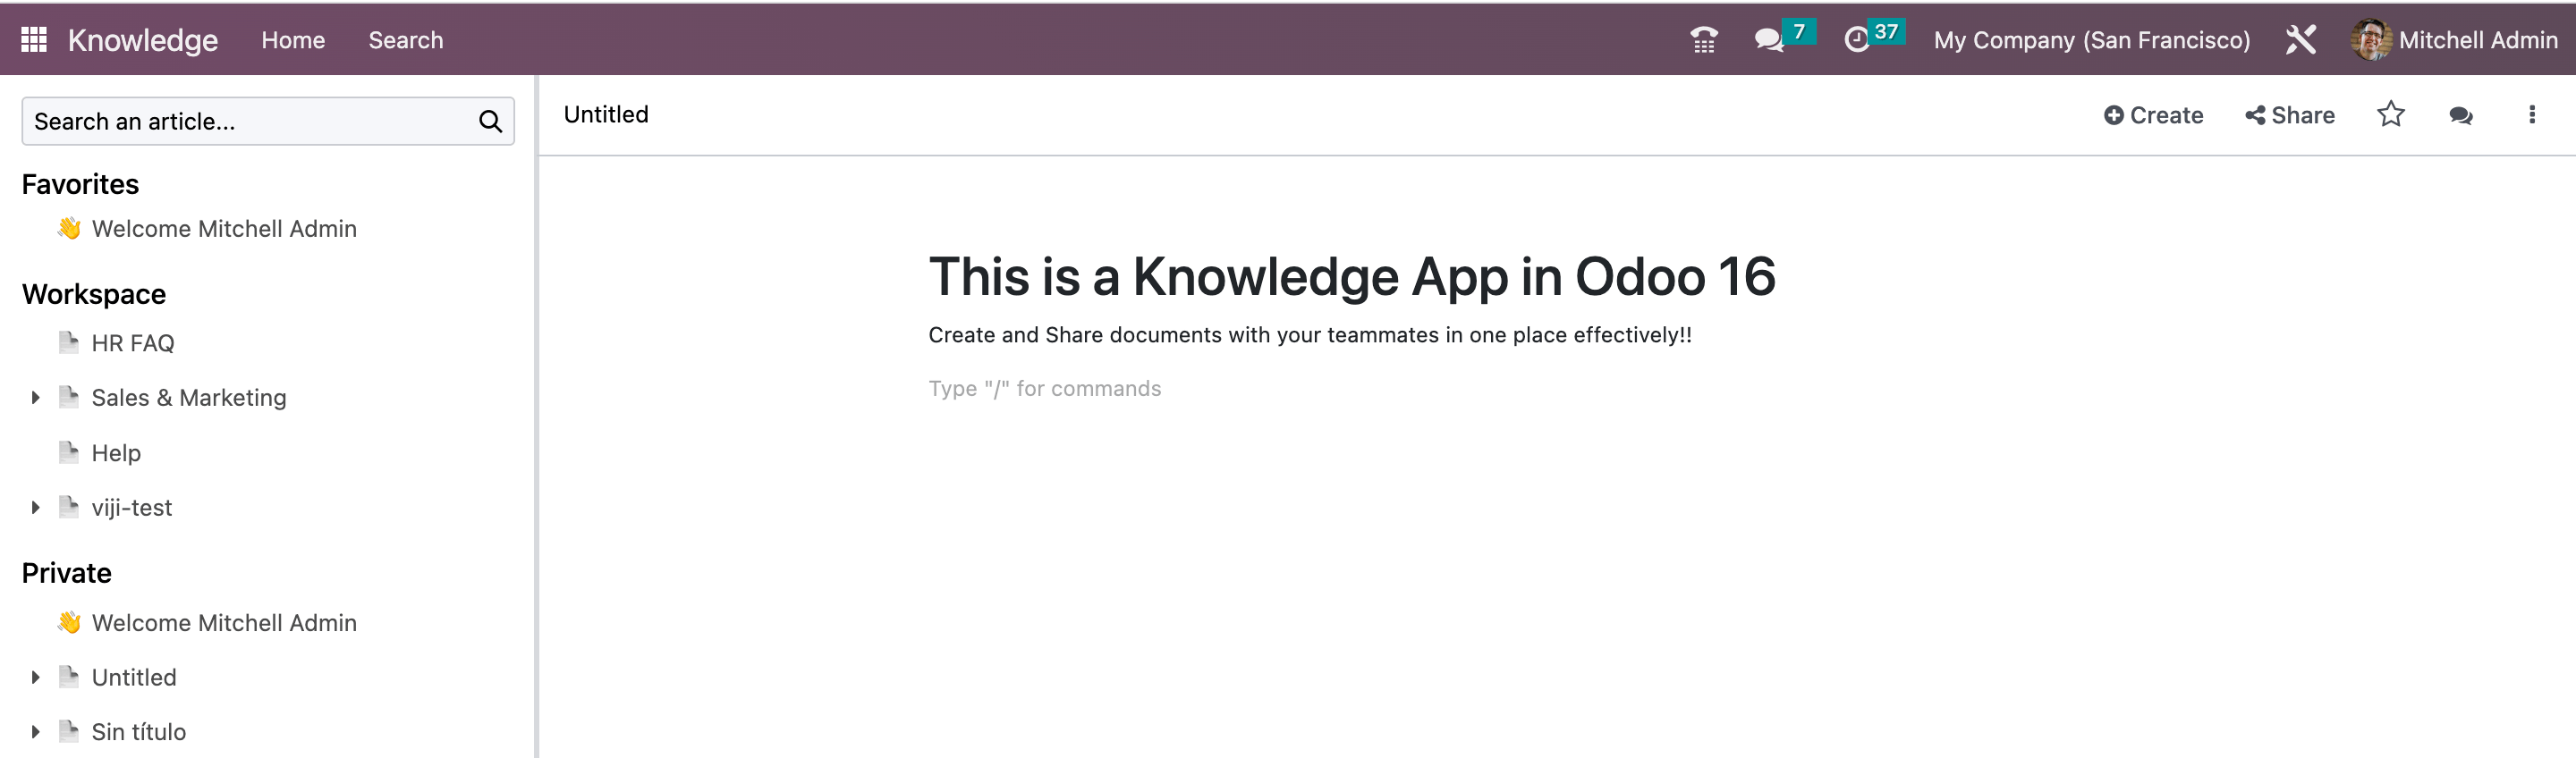 Knowledge App in odoo 16